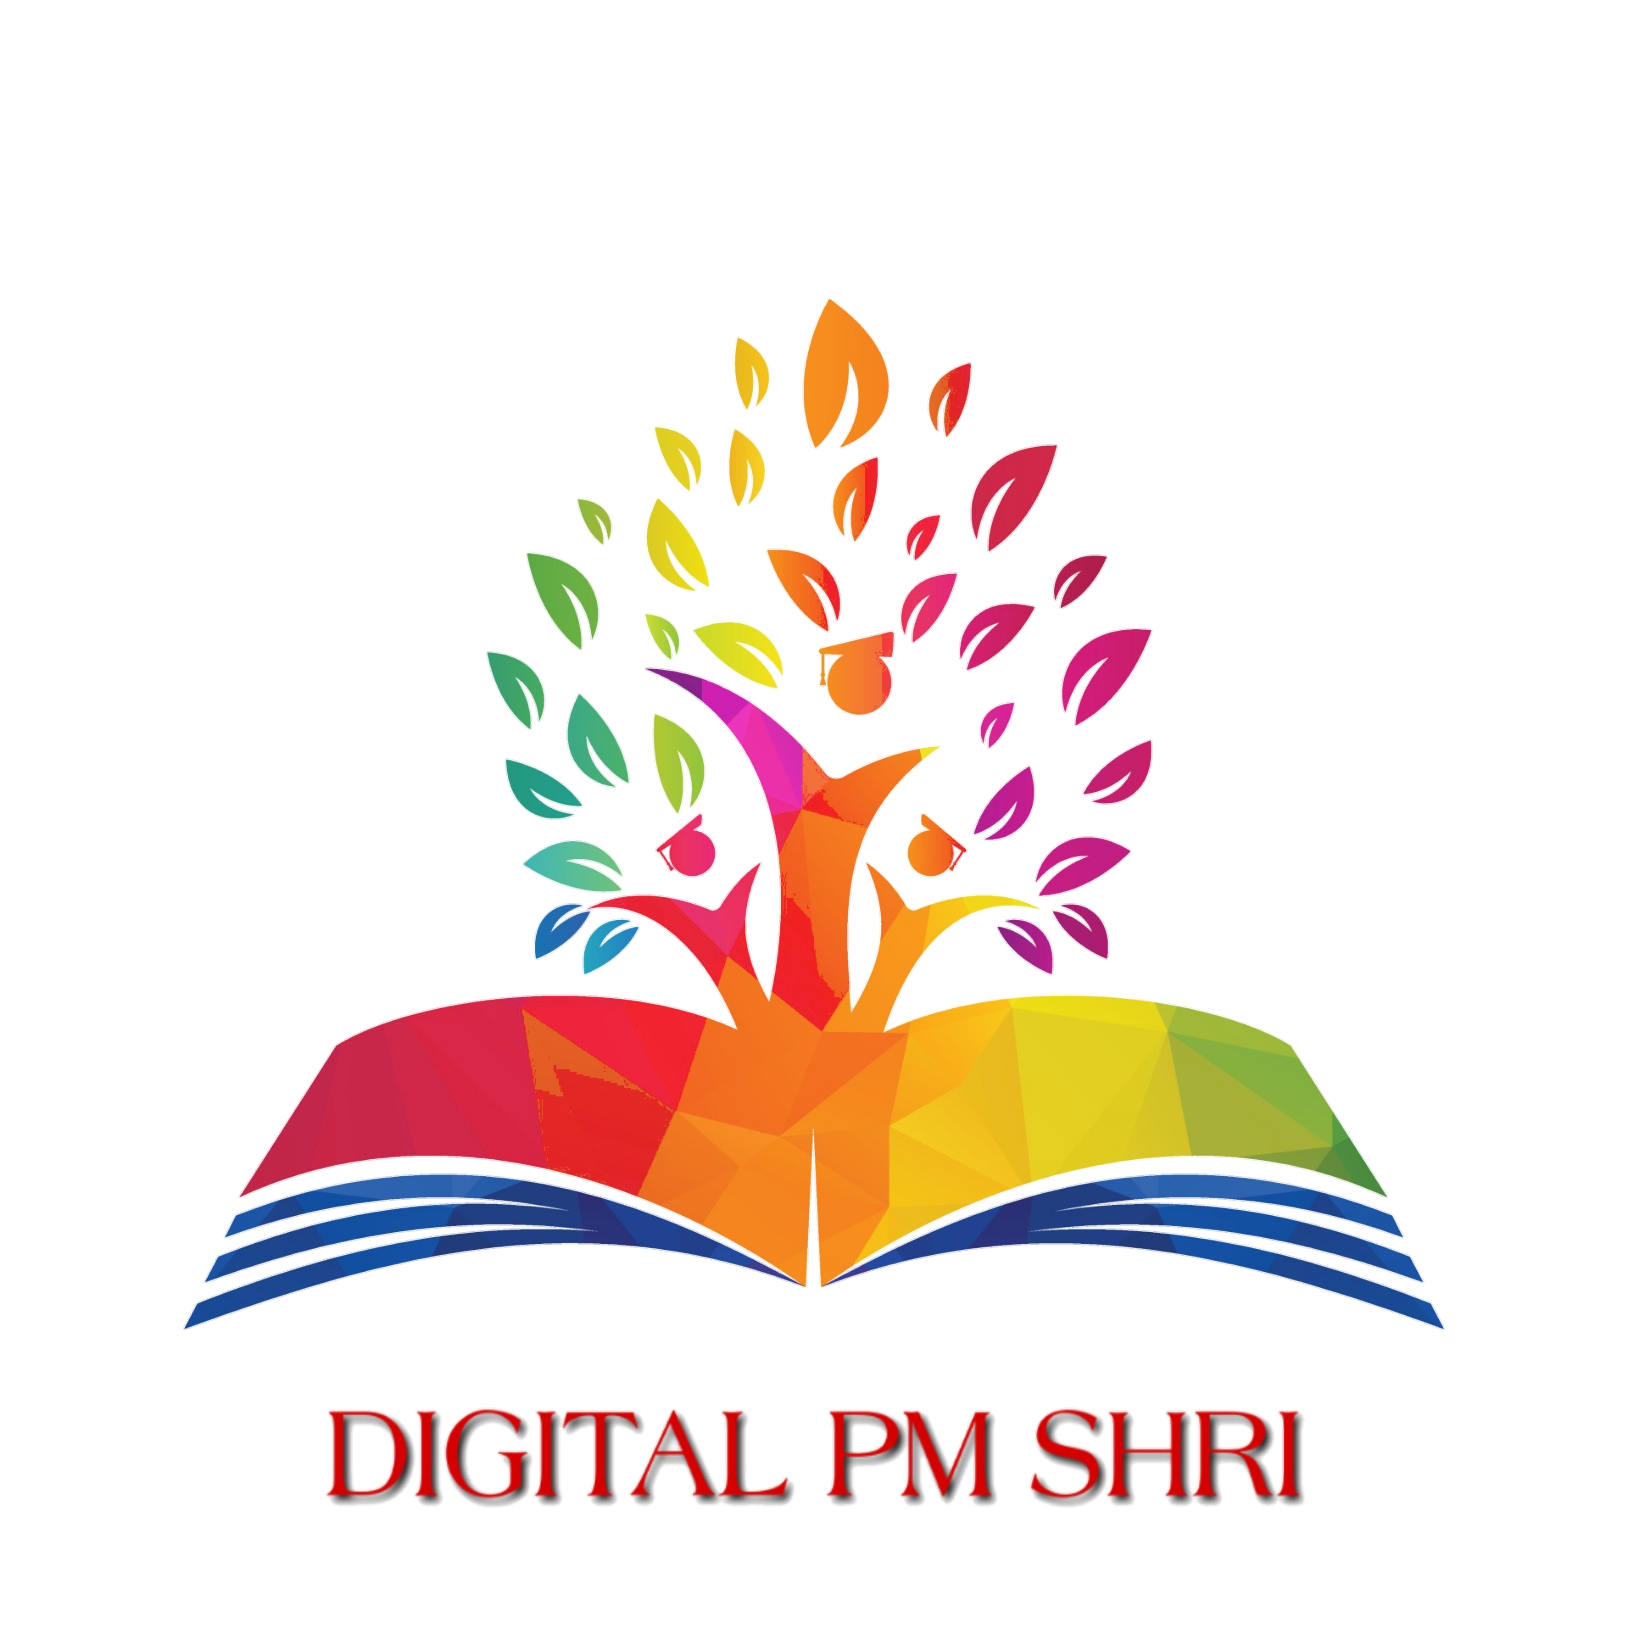 Digital PM SHRI